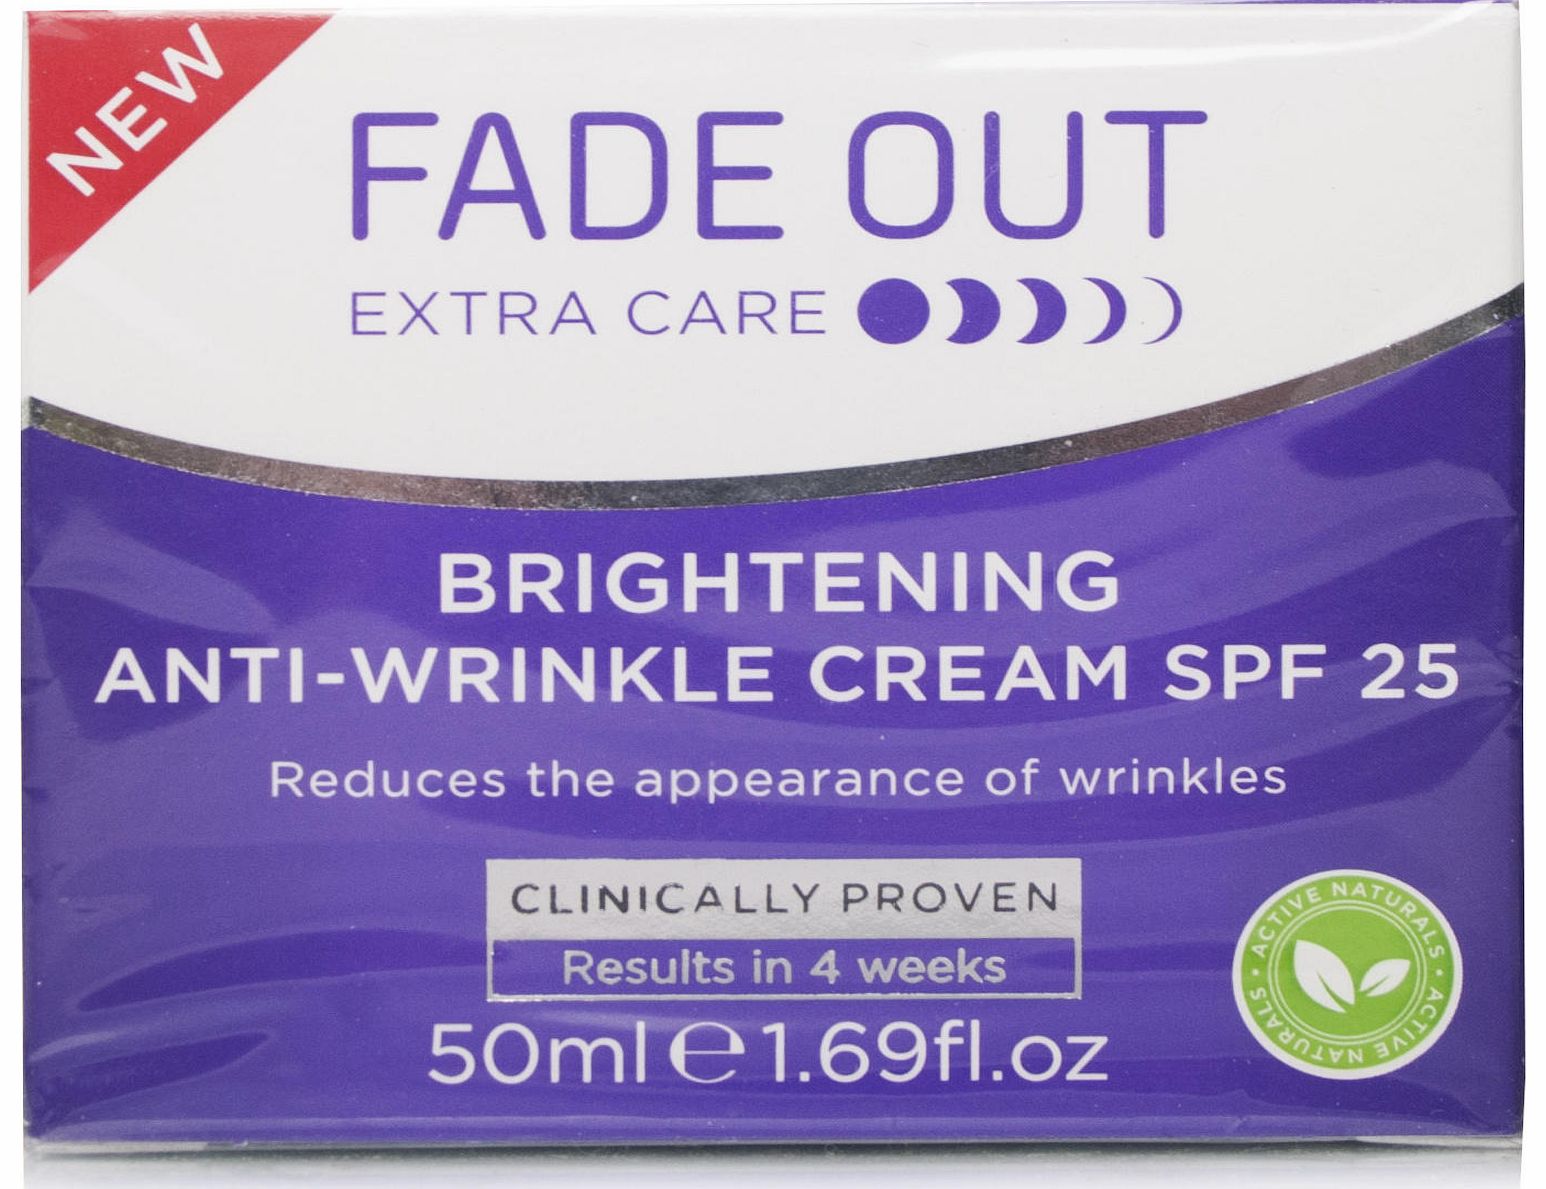 Brightening Anti-Wrinkle Cream SPF 25